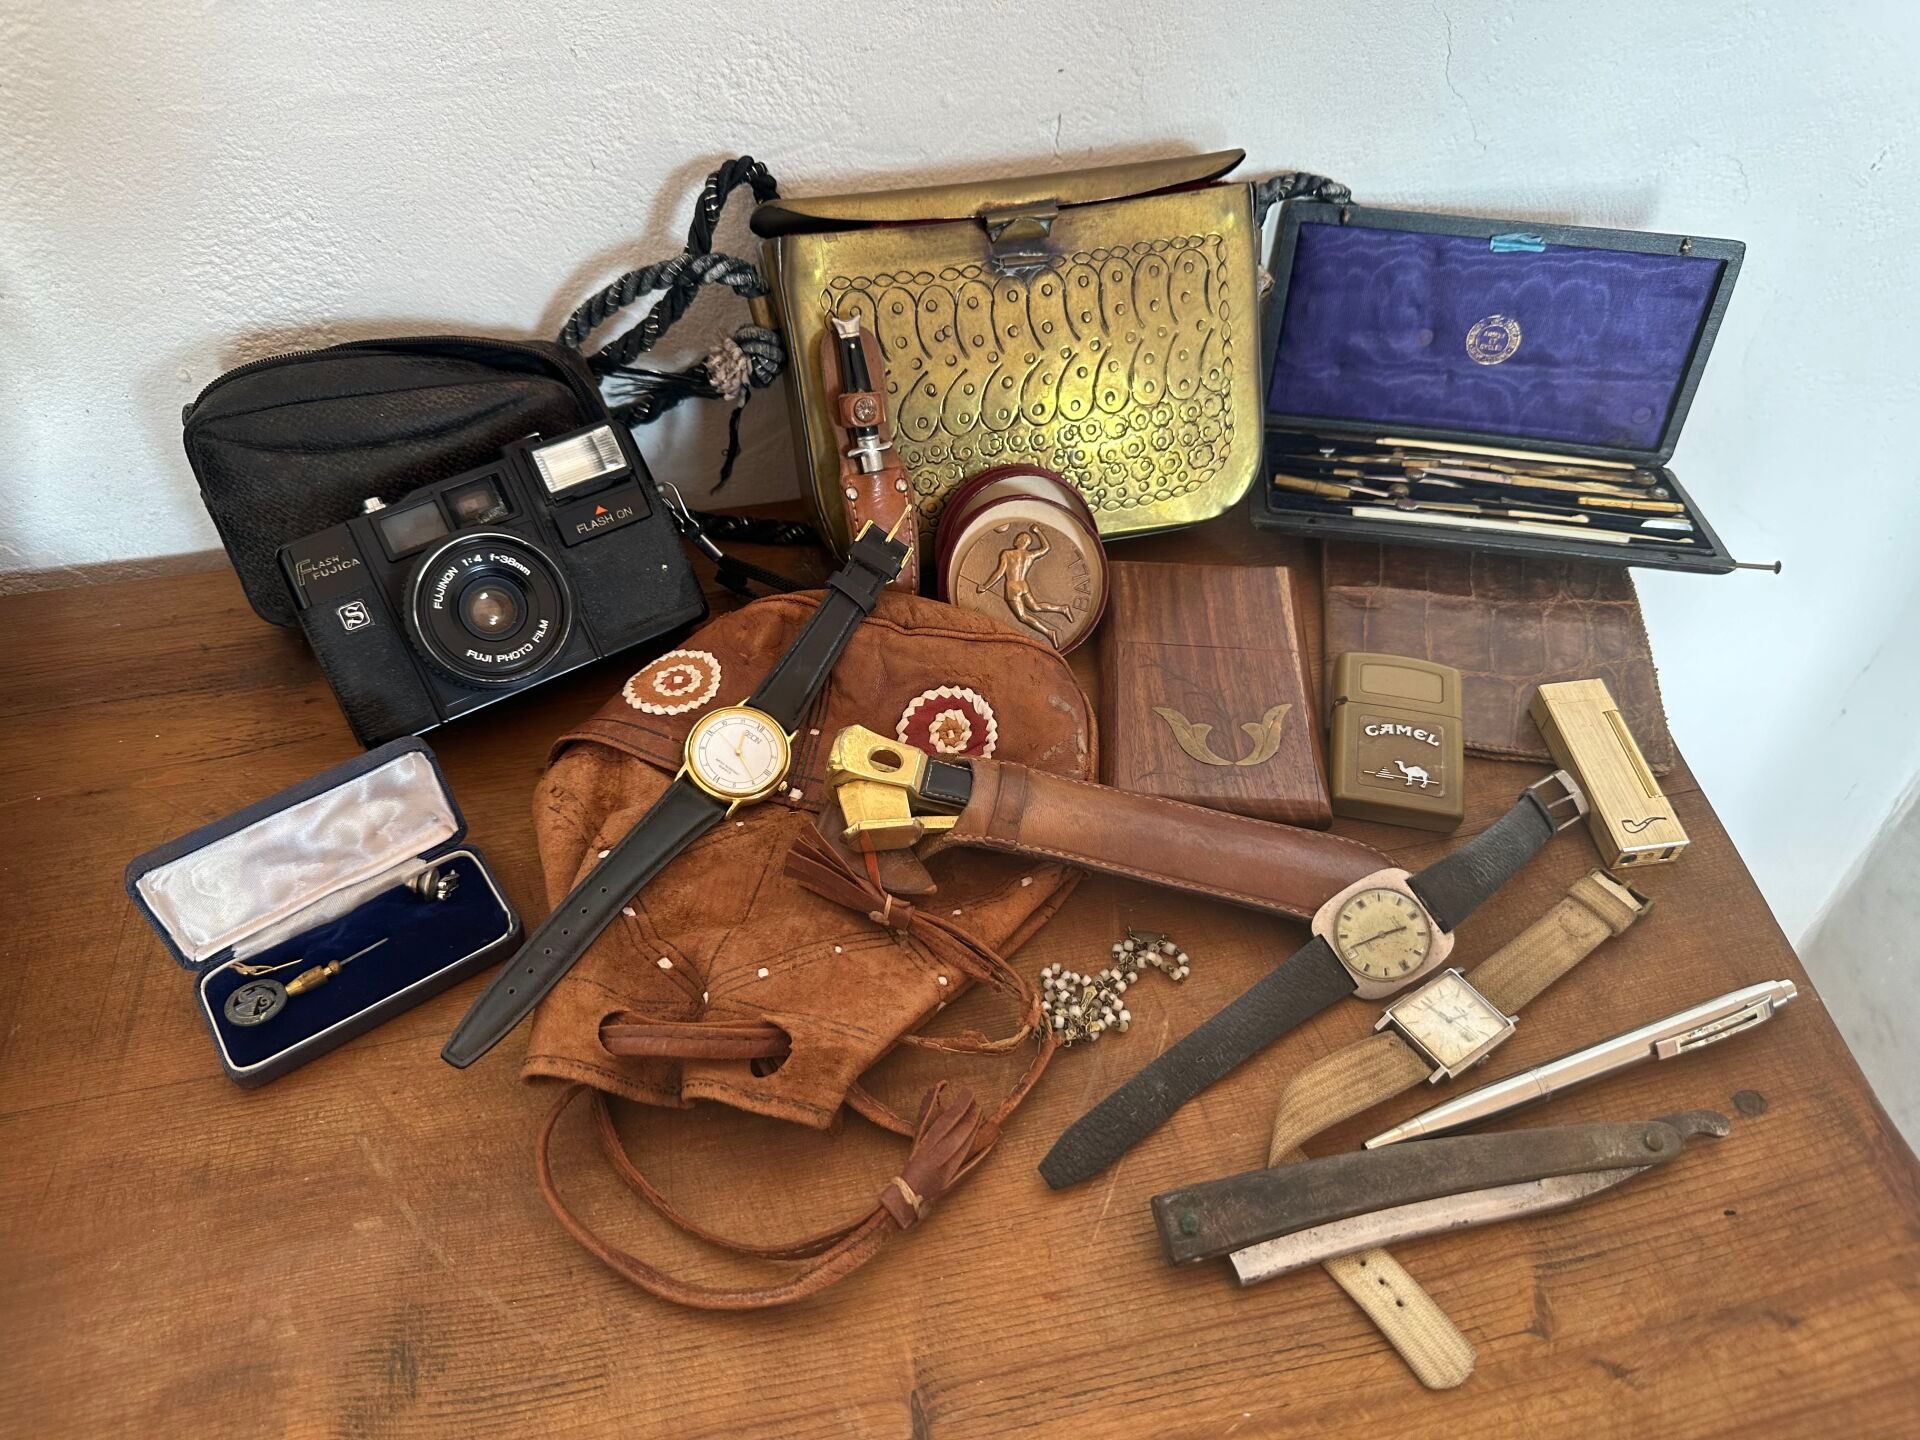 Null 拍品包括一个黄铜包、一个圣埃蒂安指南针盒、一个FLASH FUJICA相机、一枚 "排球 "铜牌、两个不匹配的打火机以及其他杂项。
(原状，有磨损和事&hellip;